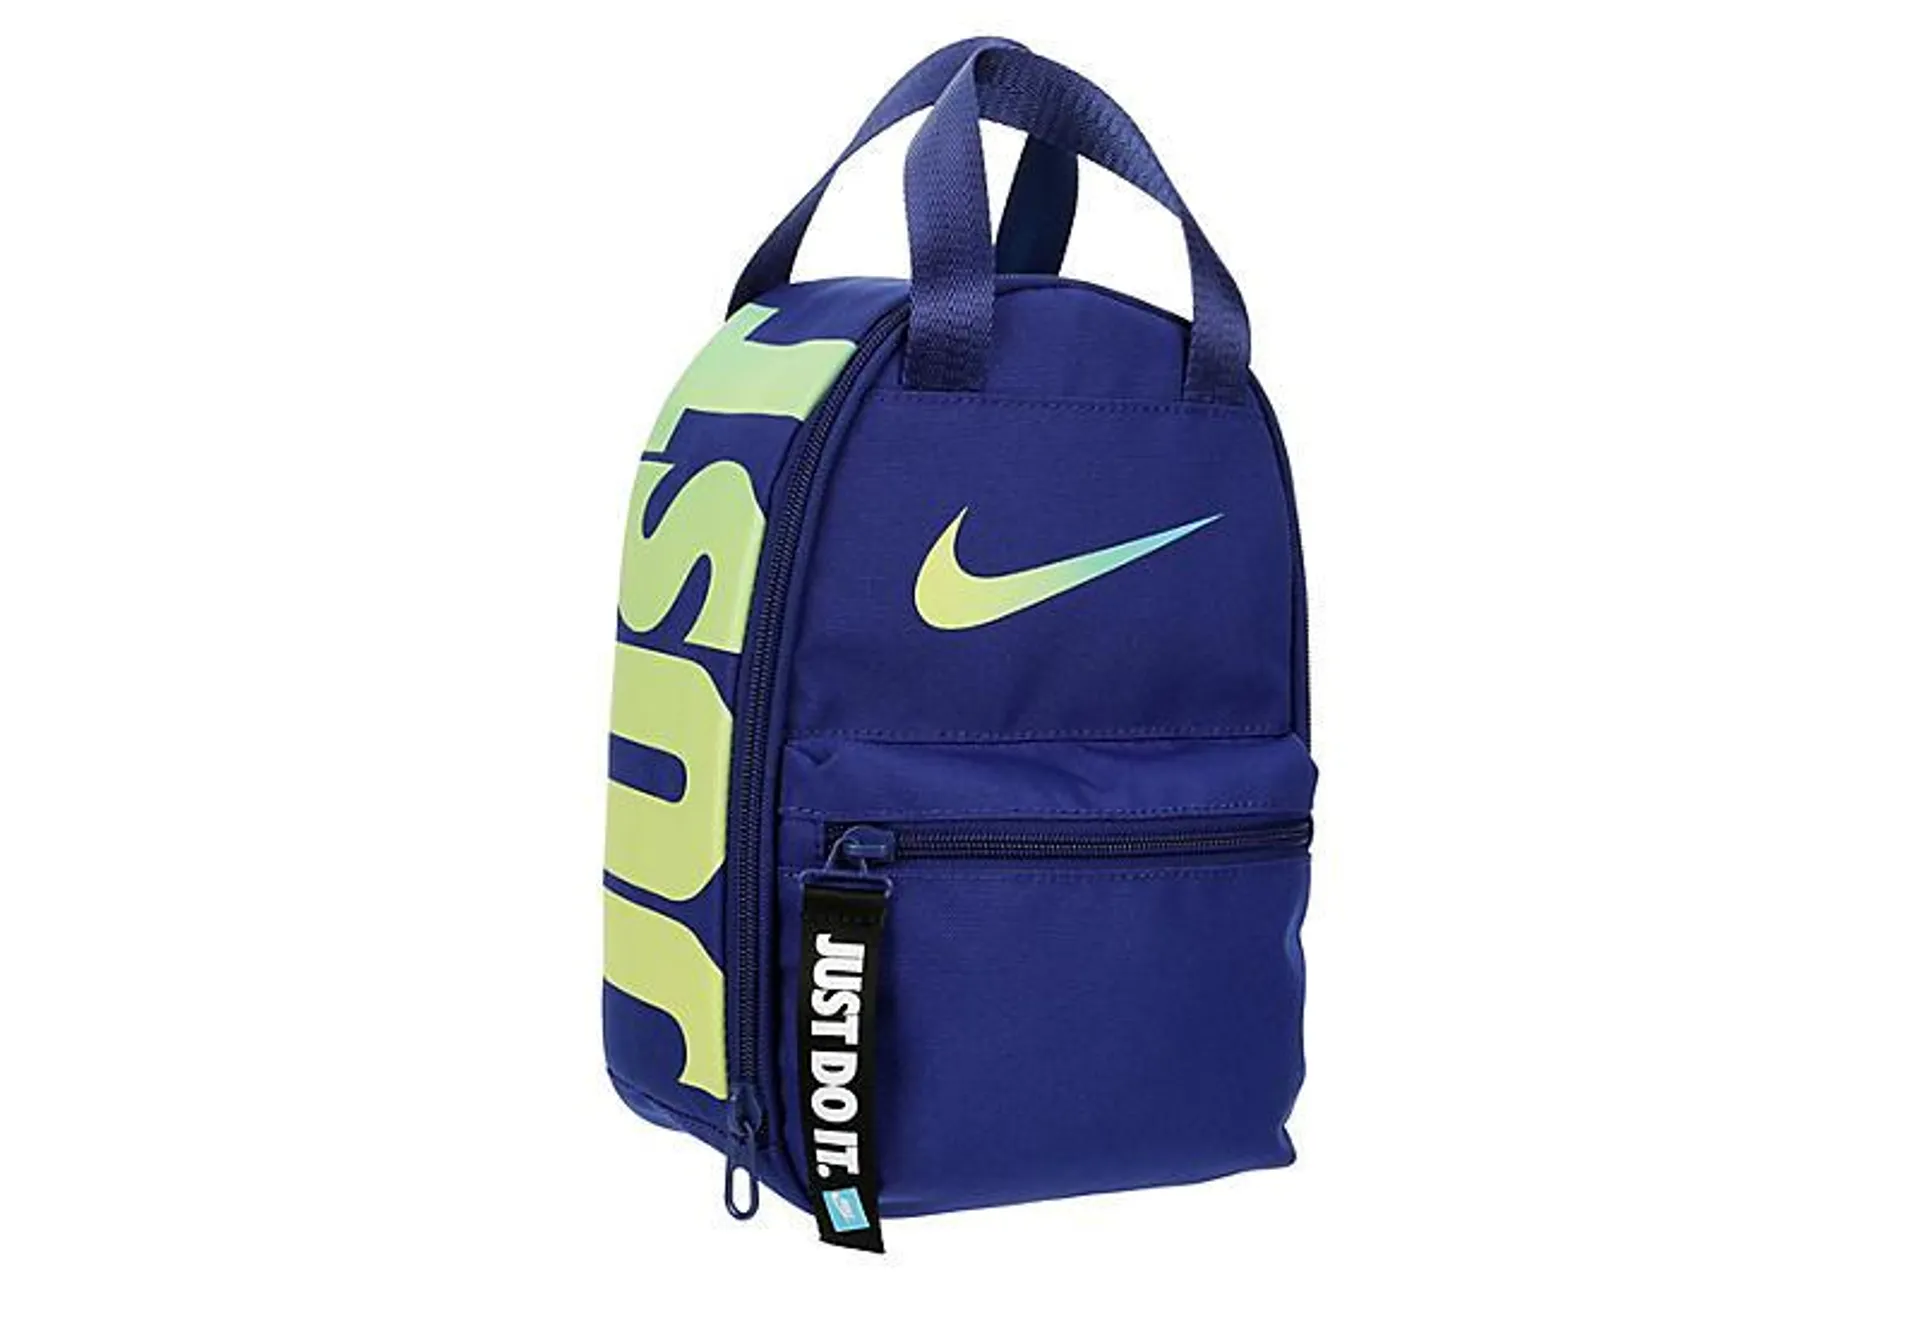 Nike Unisex Jdi Zip Pull Lunch Bag - Blue